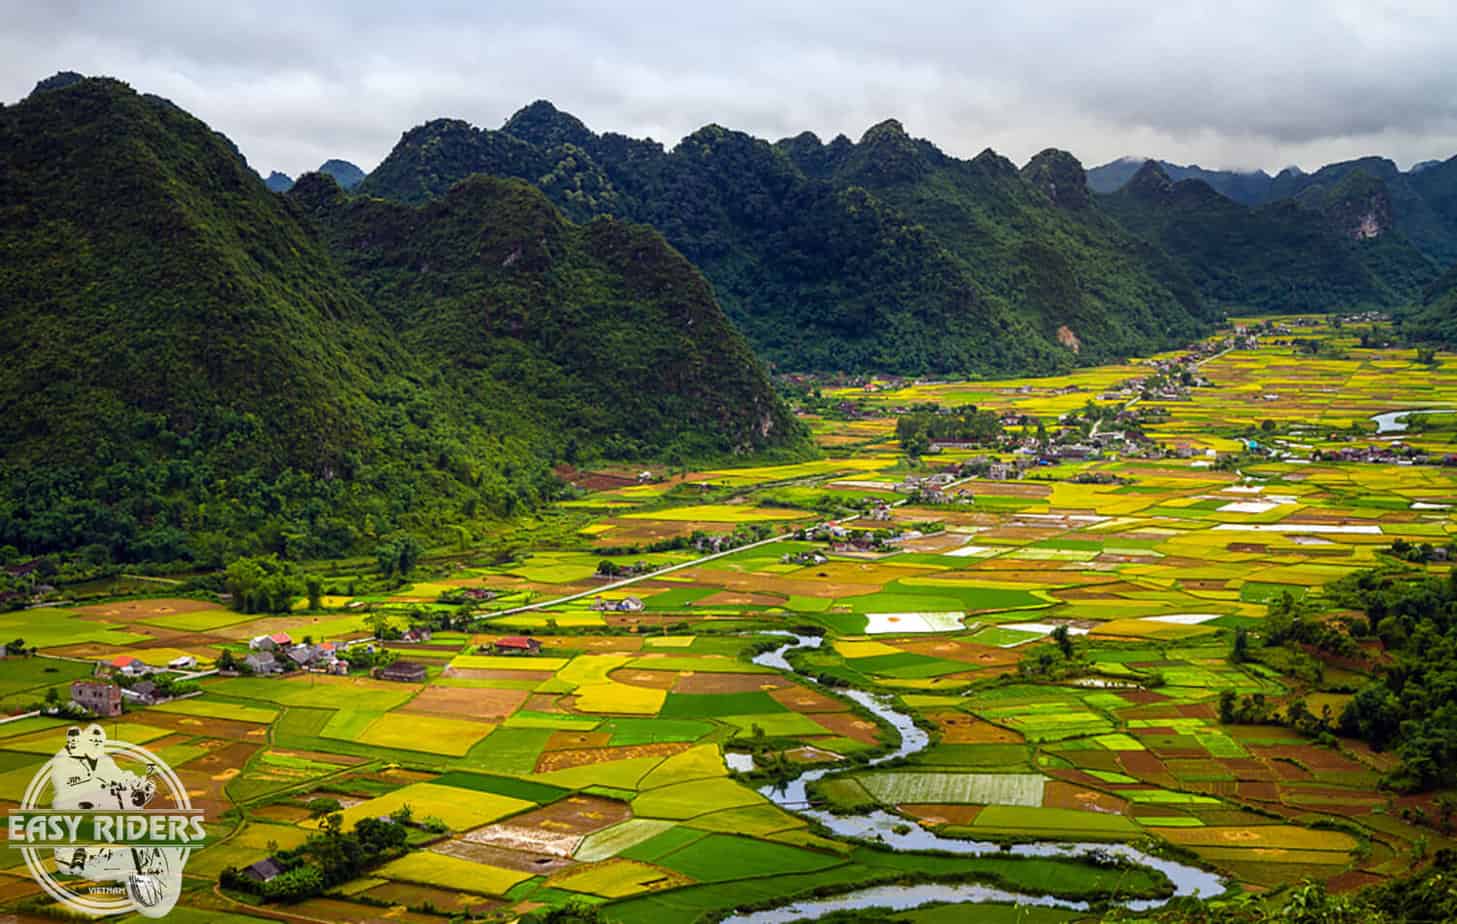 Vietnam's beautiful rice fields - Bac Son Valley